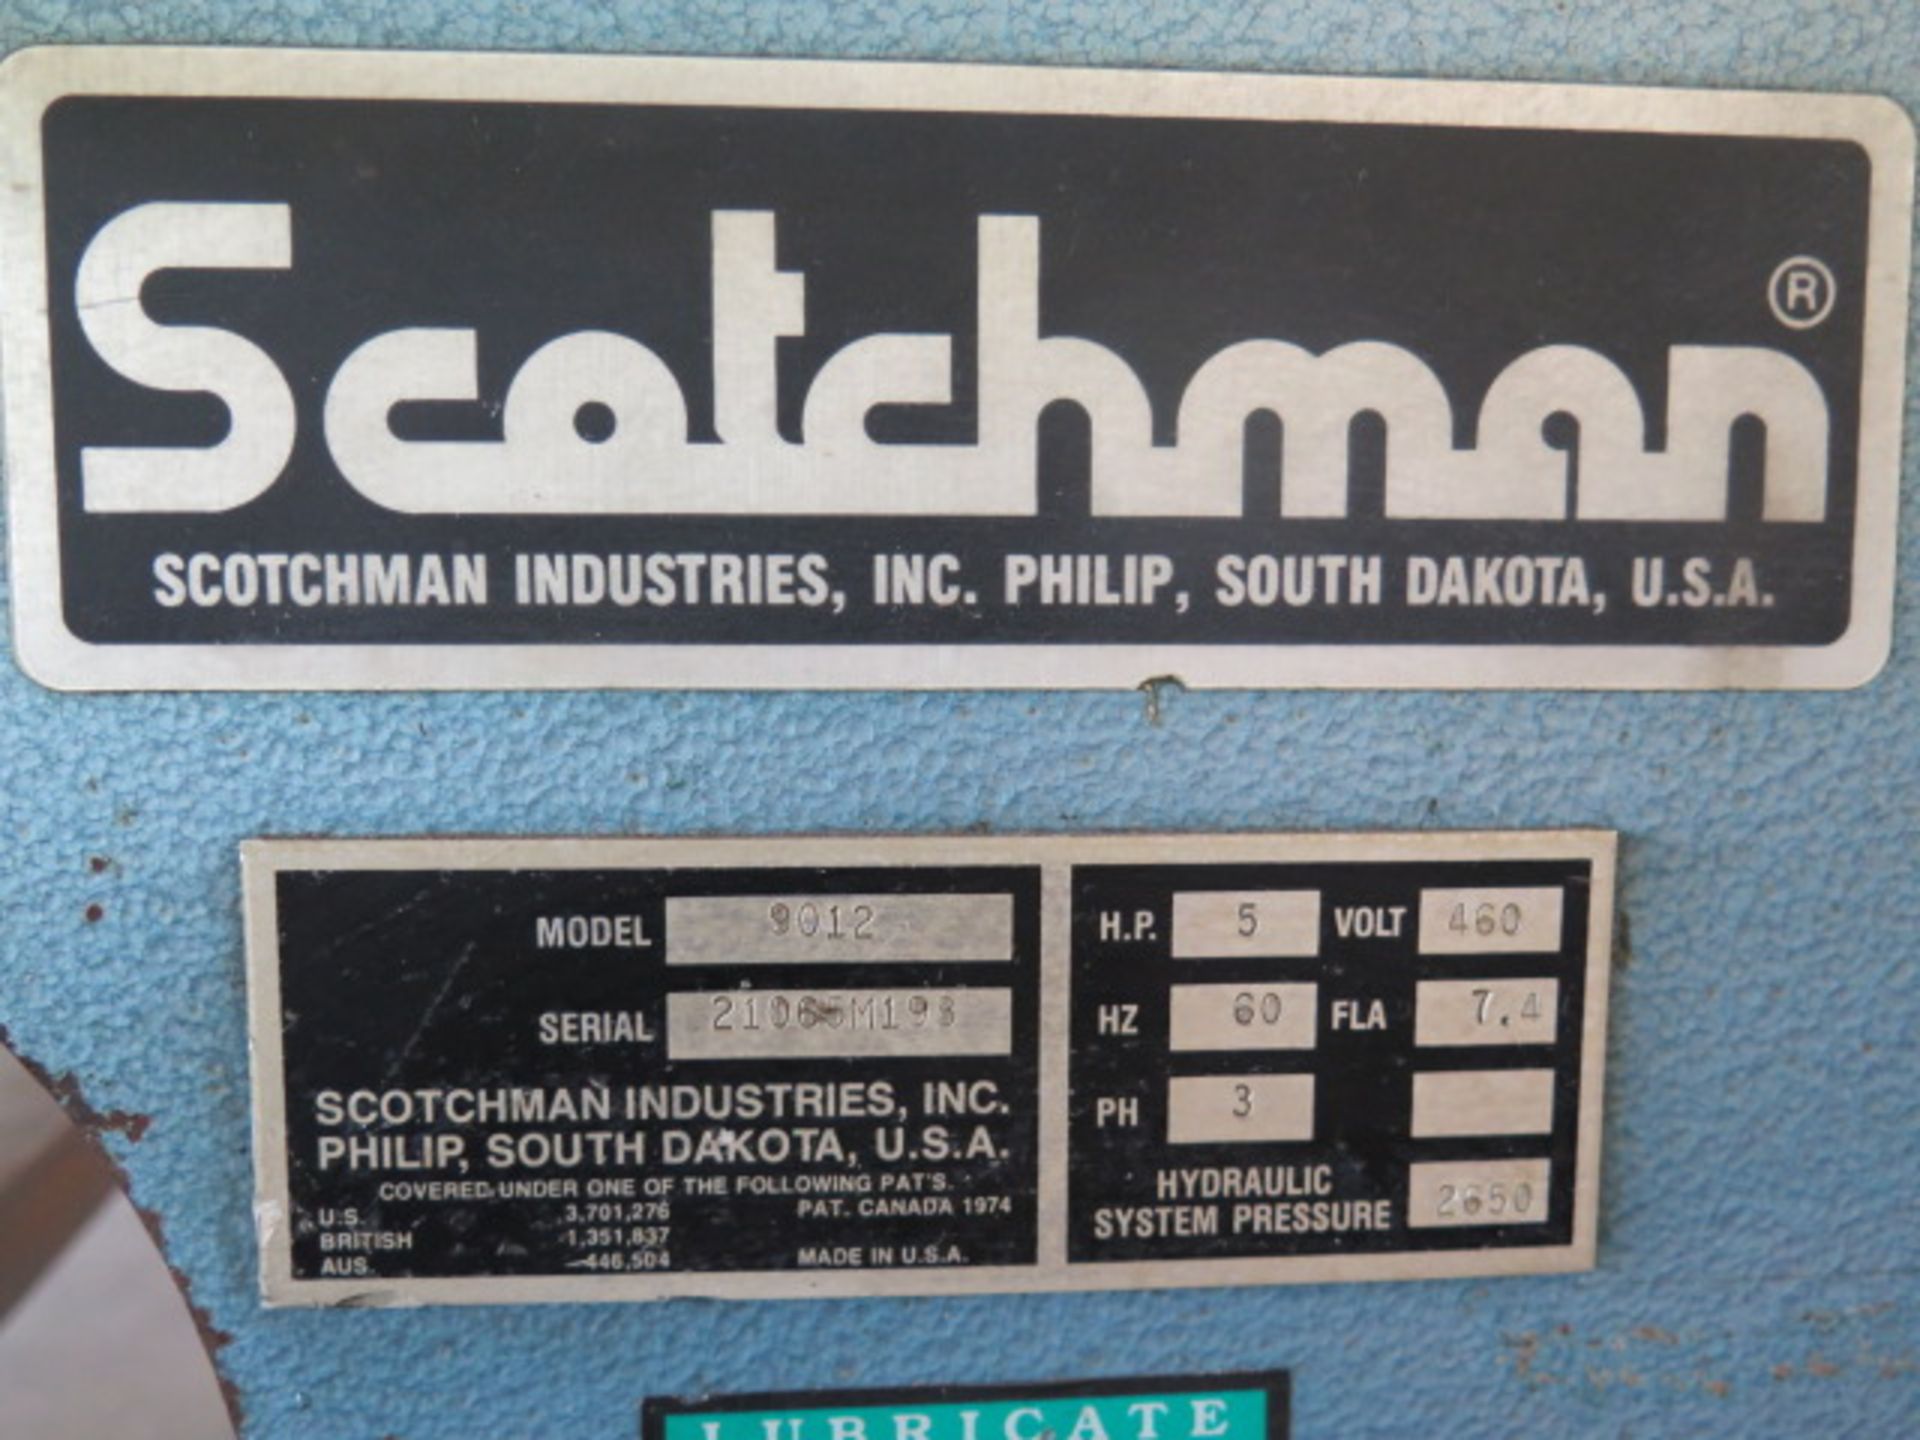 Scotchman 9012 90 Ton Hydraulic Iron Worker s/n 21065M198 w/ 1 1/16” Thru 1” Punch Cap, 1” x - Image 10 of 10